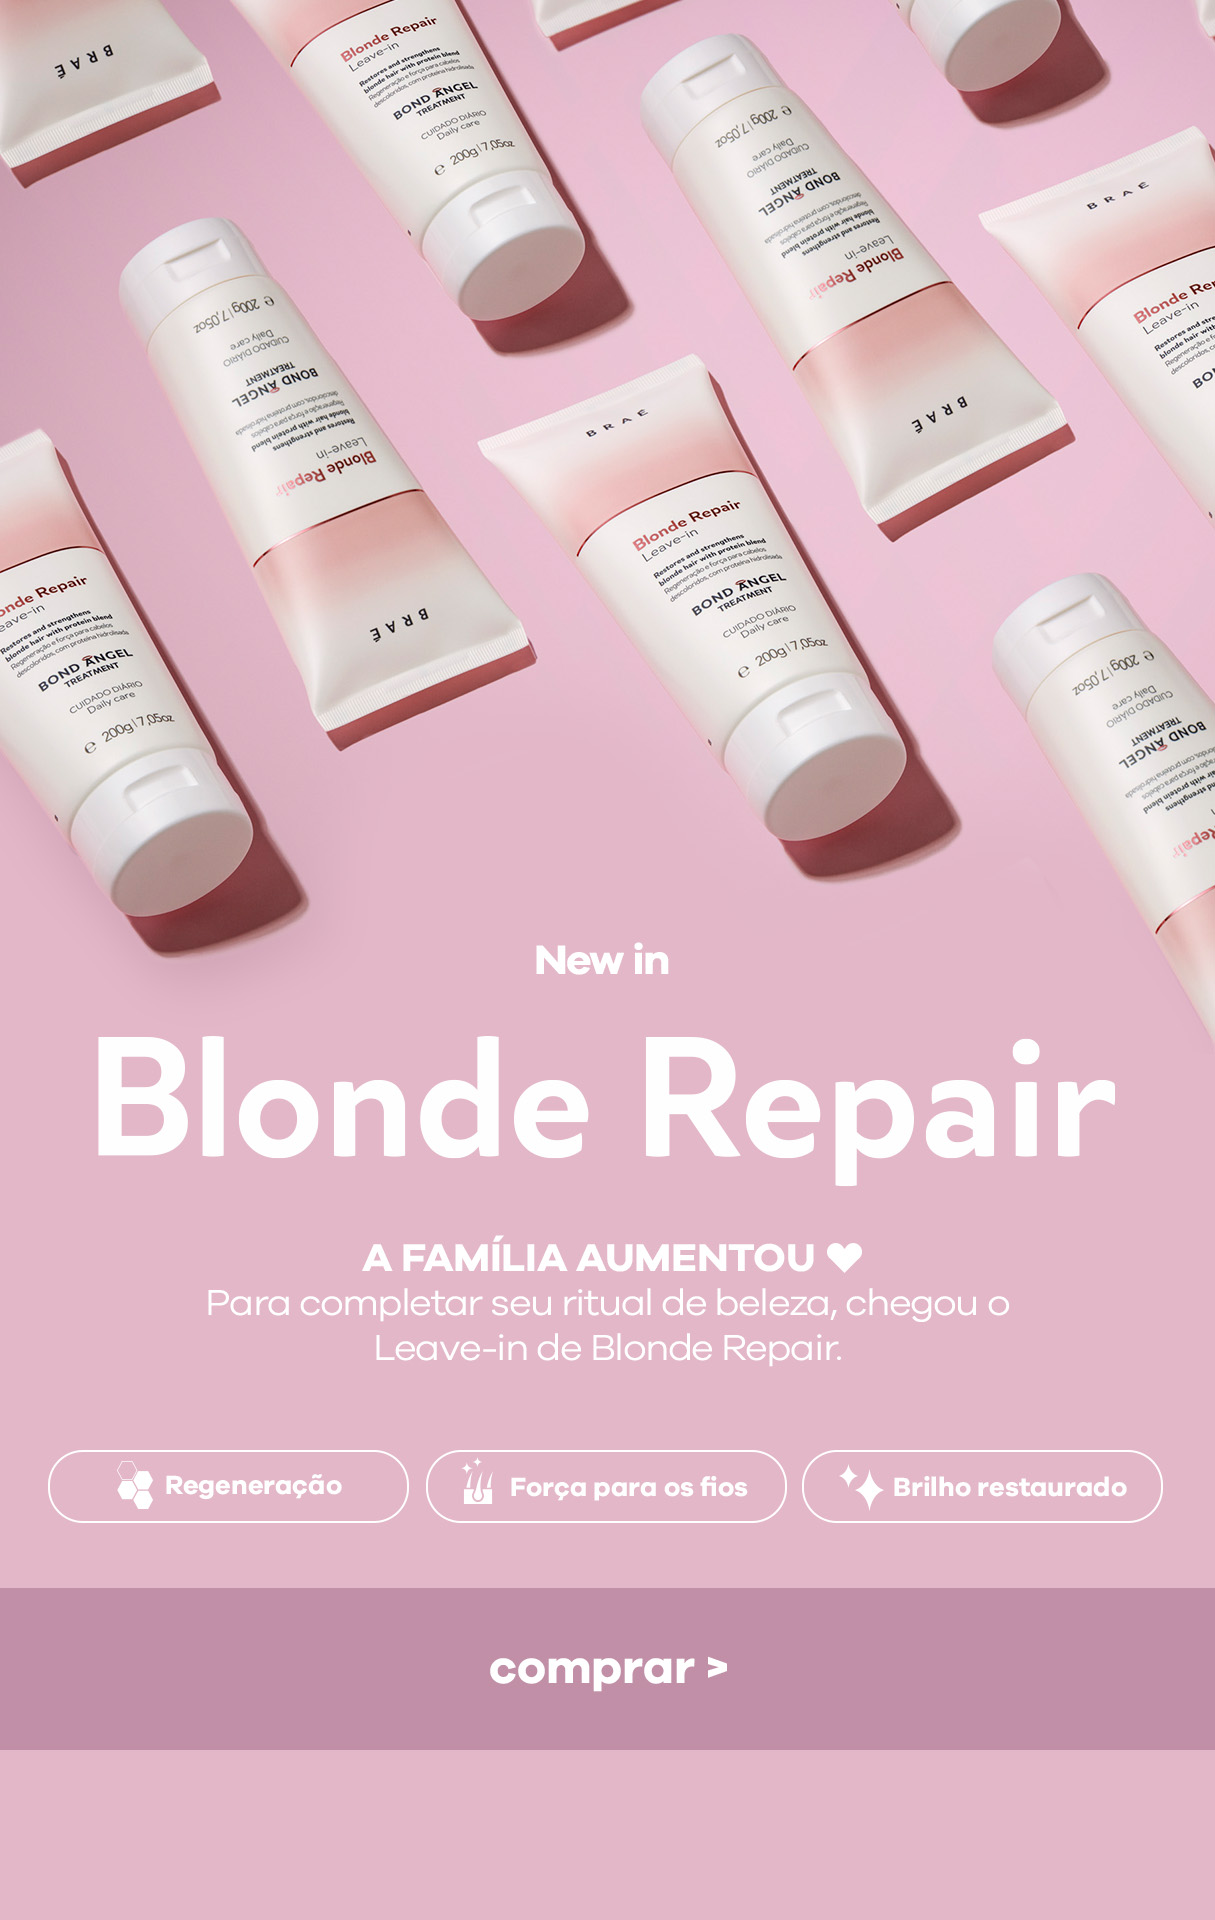 blonde repair - leave-in